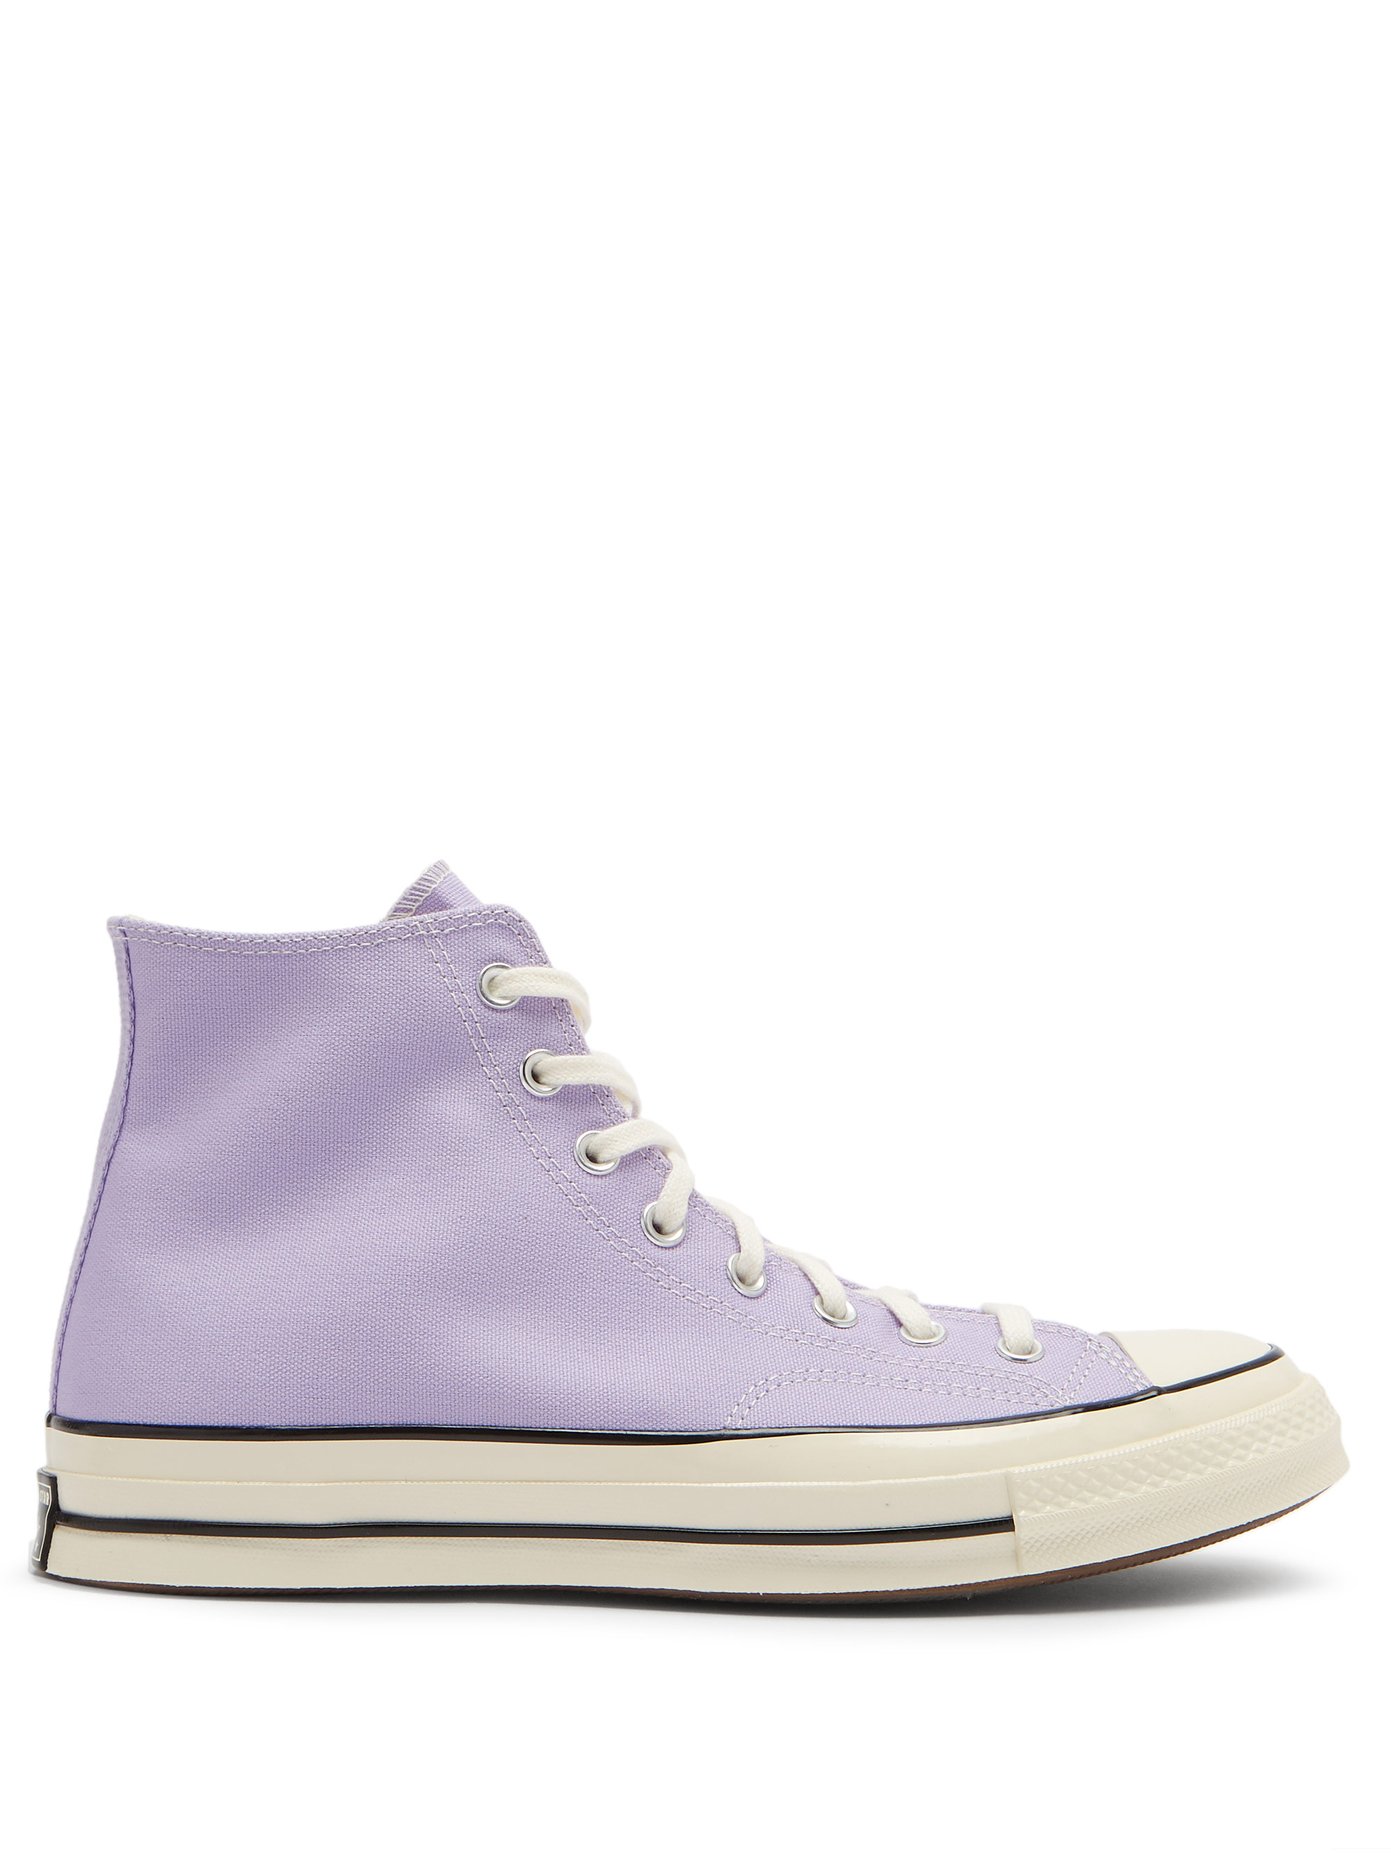 violet converse high tops